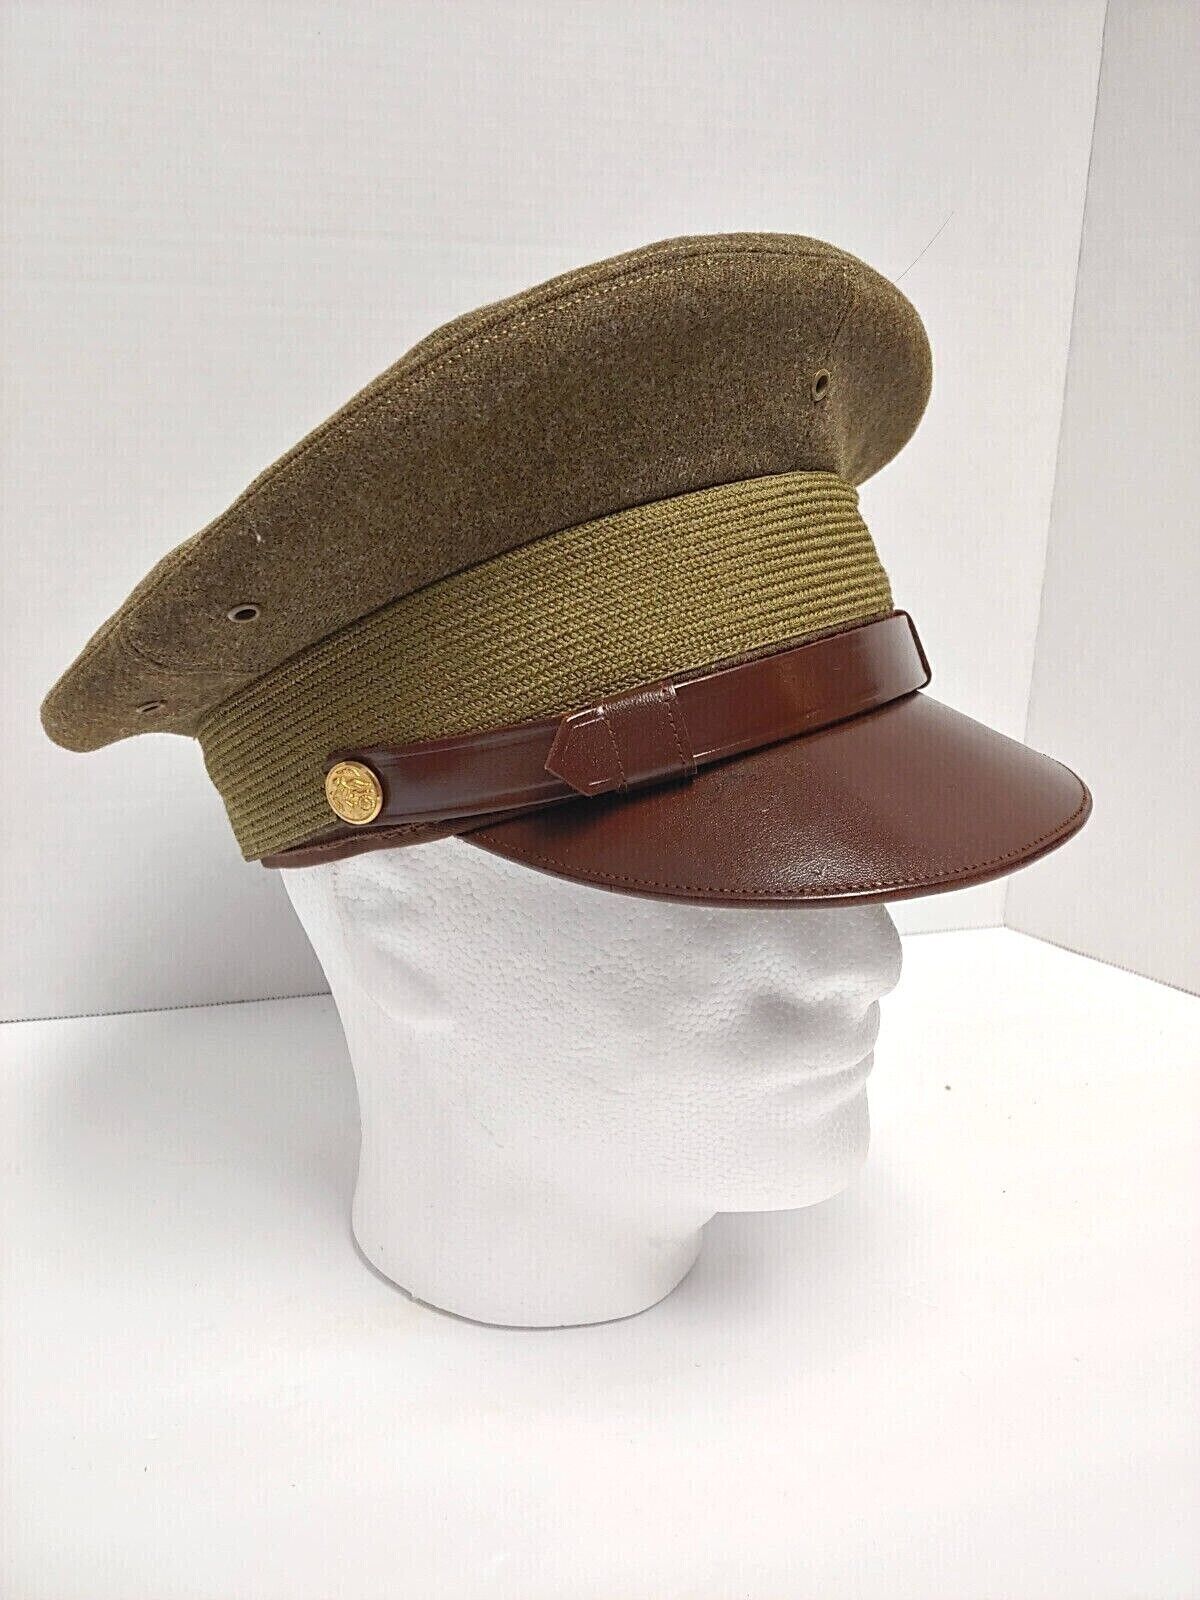 Vintage WW2 Era US Military Wool Dress Visor Cap - Size 7 1/8, Dress Uniform Hat